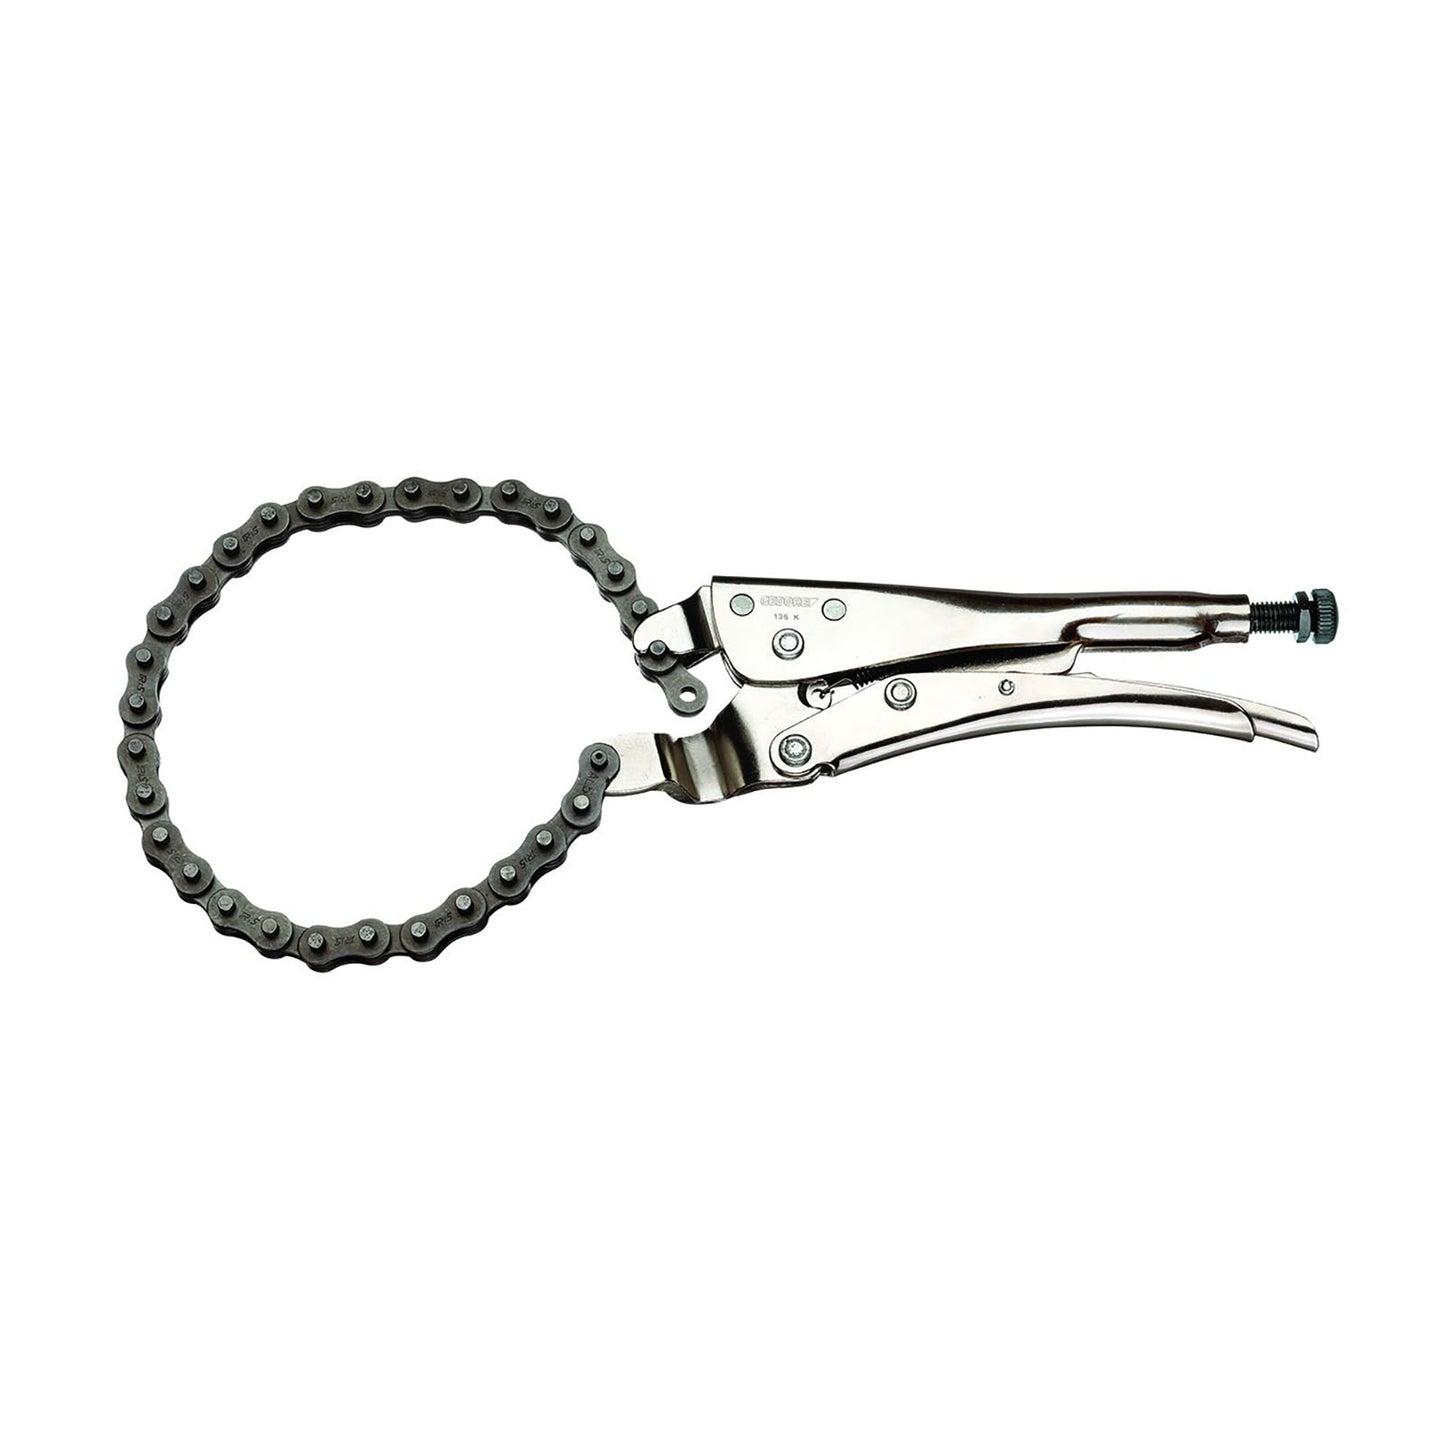 GEDORE 136 K-105 - Pince de serrage avec chaîne (2307227)